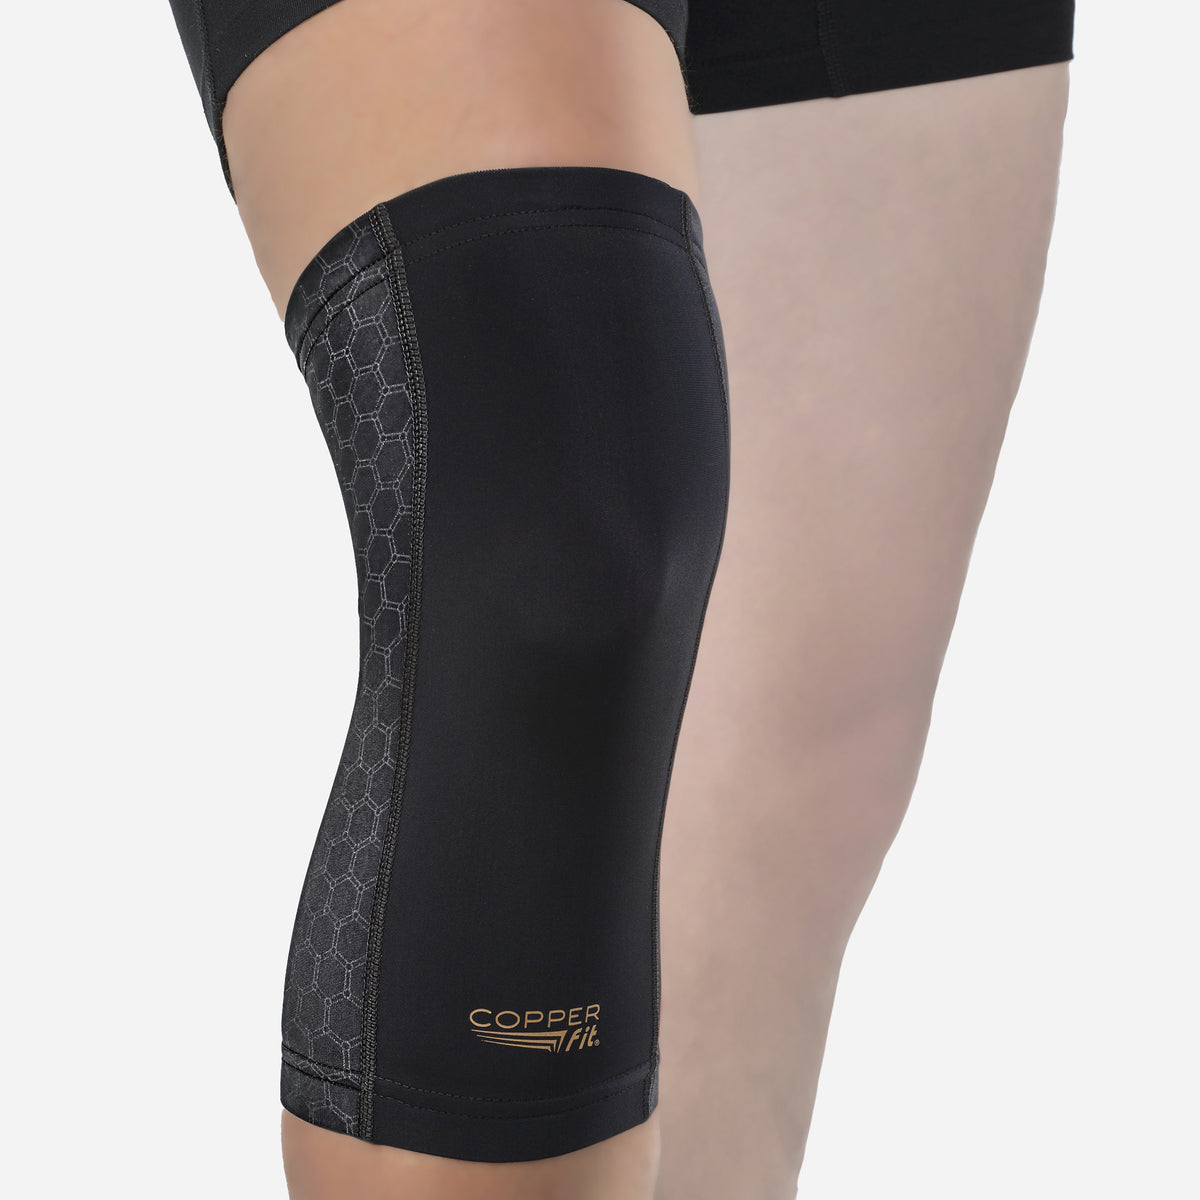  Tommie Copper Knee Sleeve, Black, 3X-Large : Health